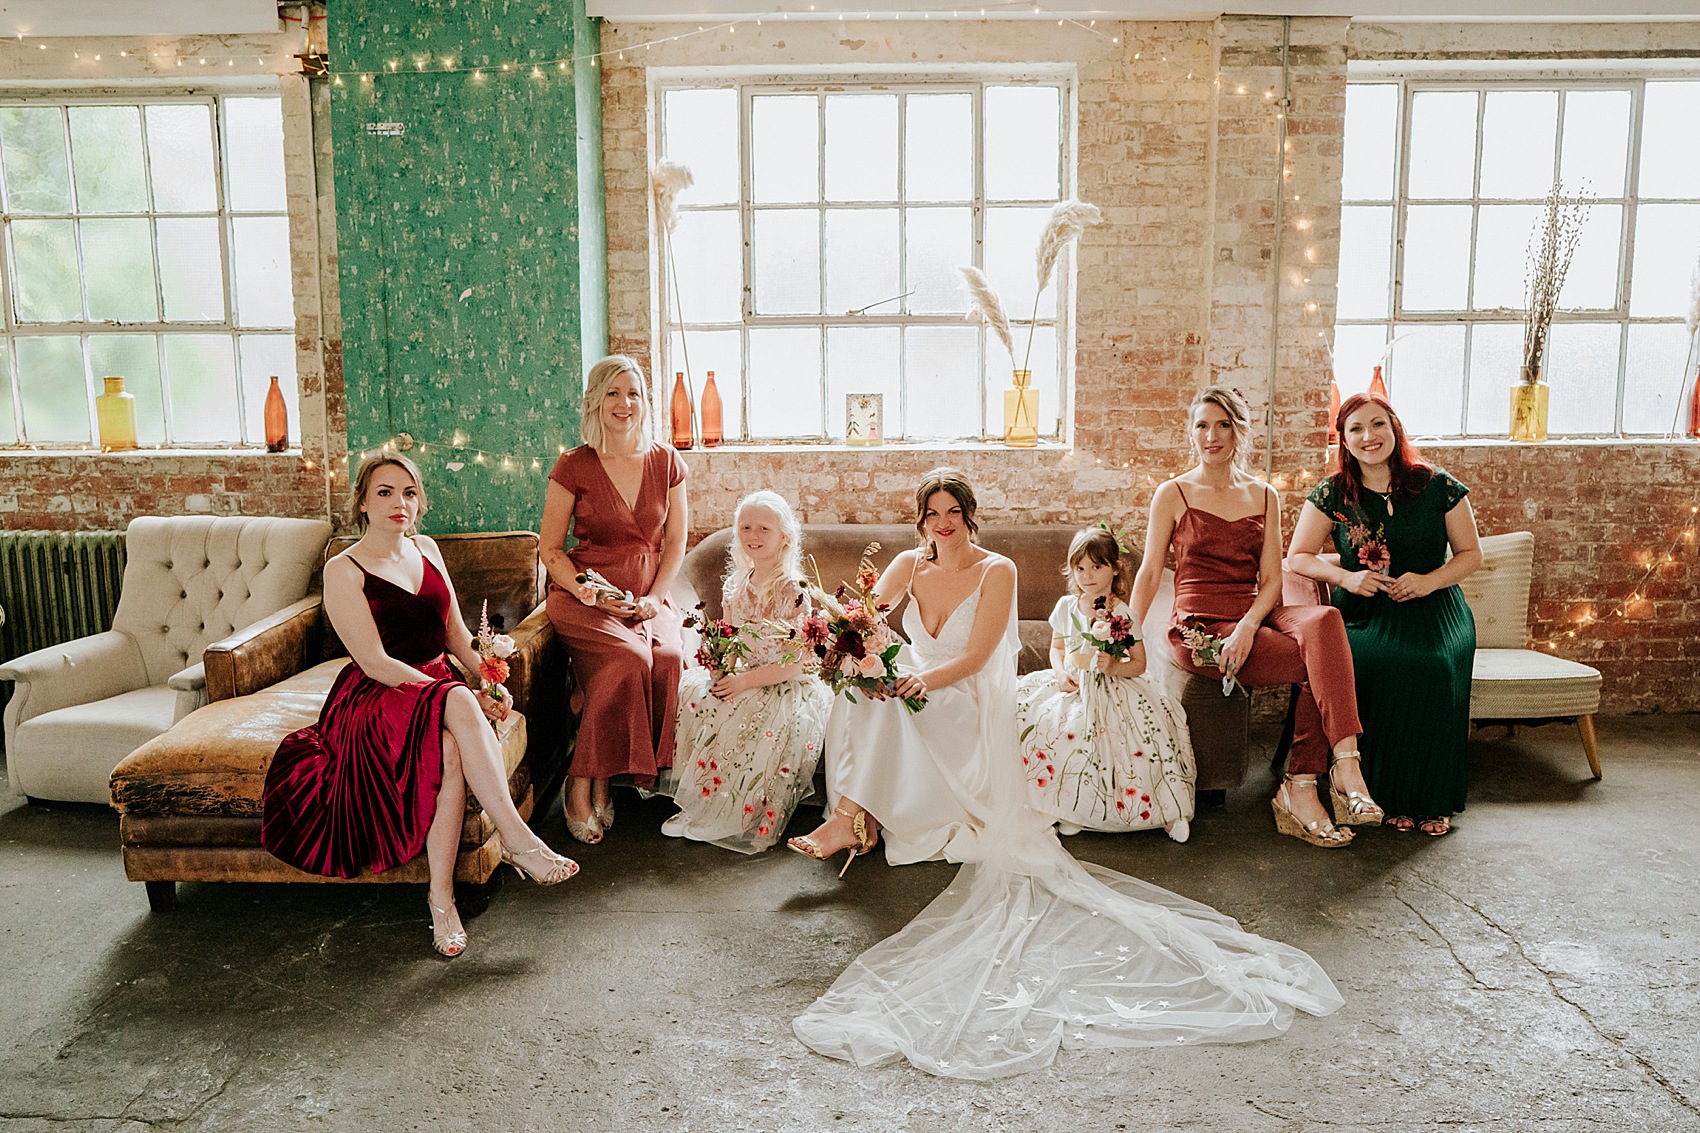 Halfpenny London bride warehouse wedding 17